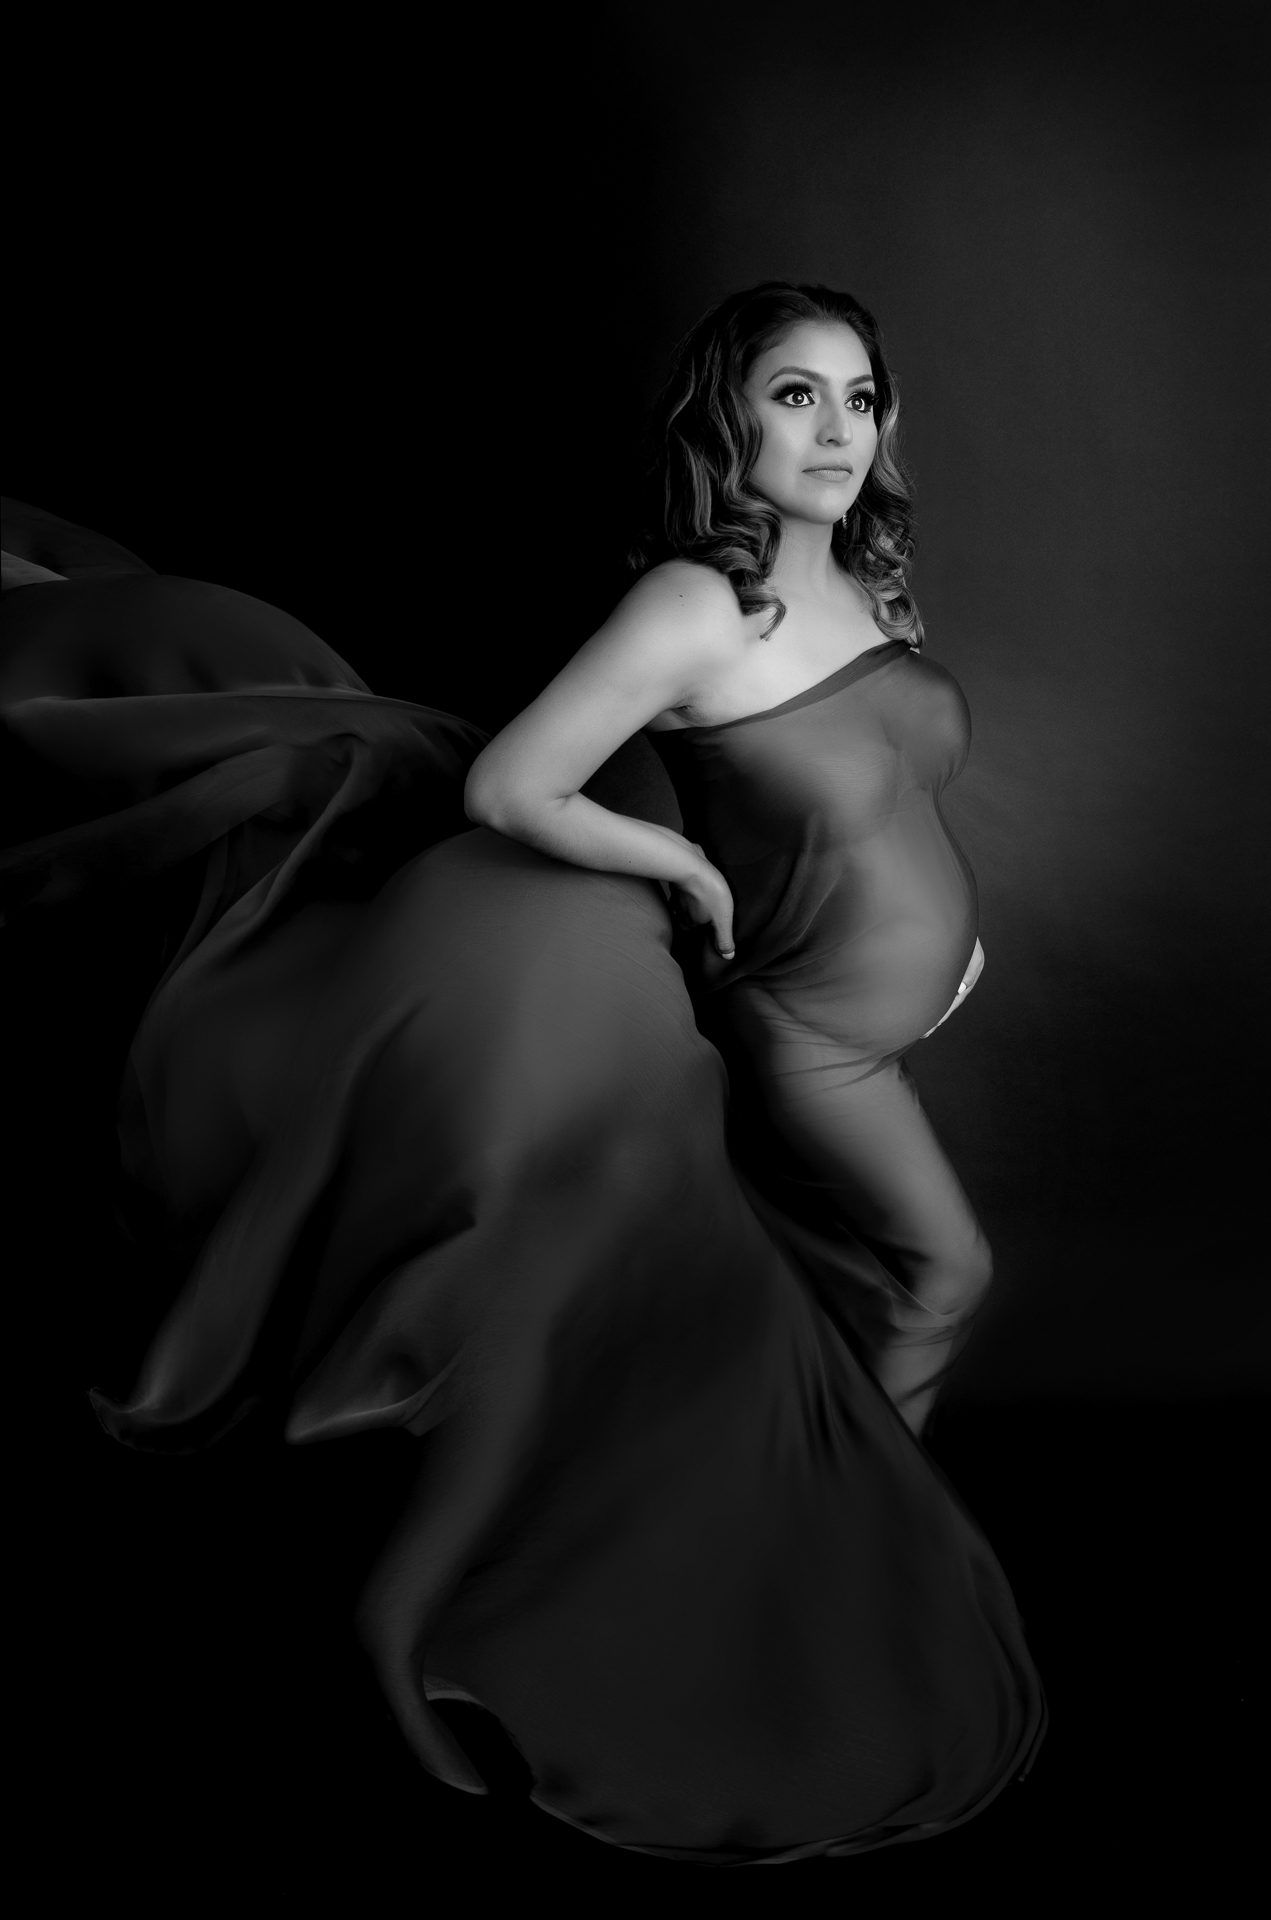 Pregnant woman wears dar fabric dress, dark backdrop, black and white image.